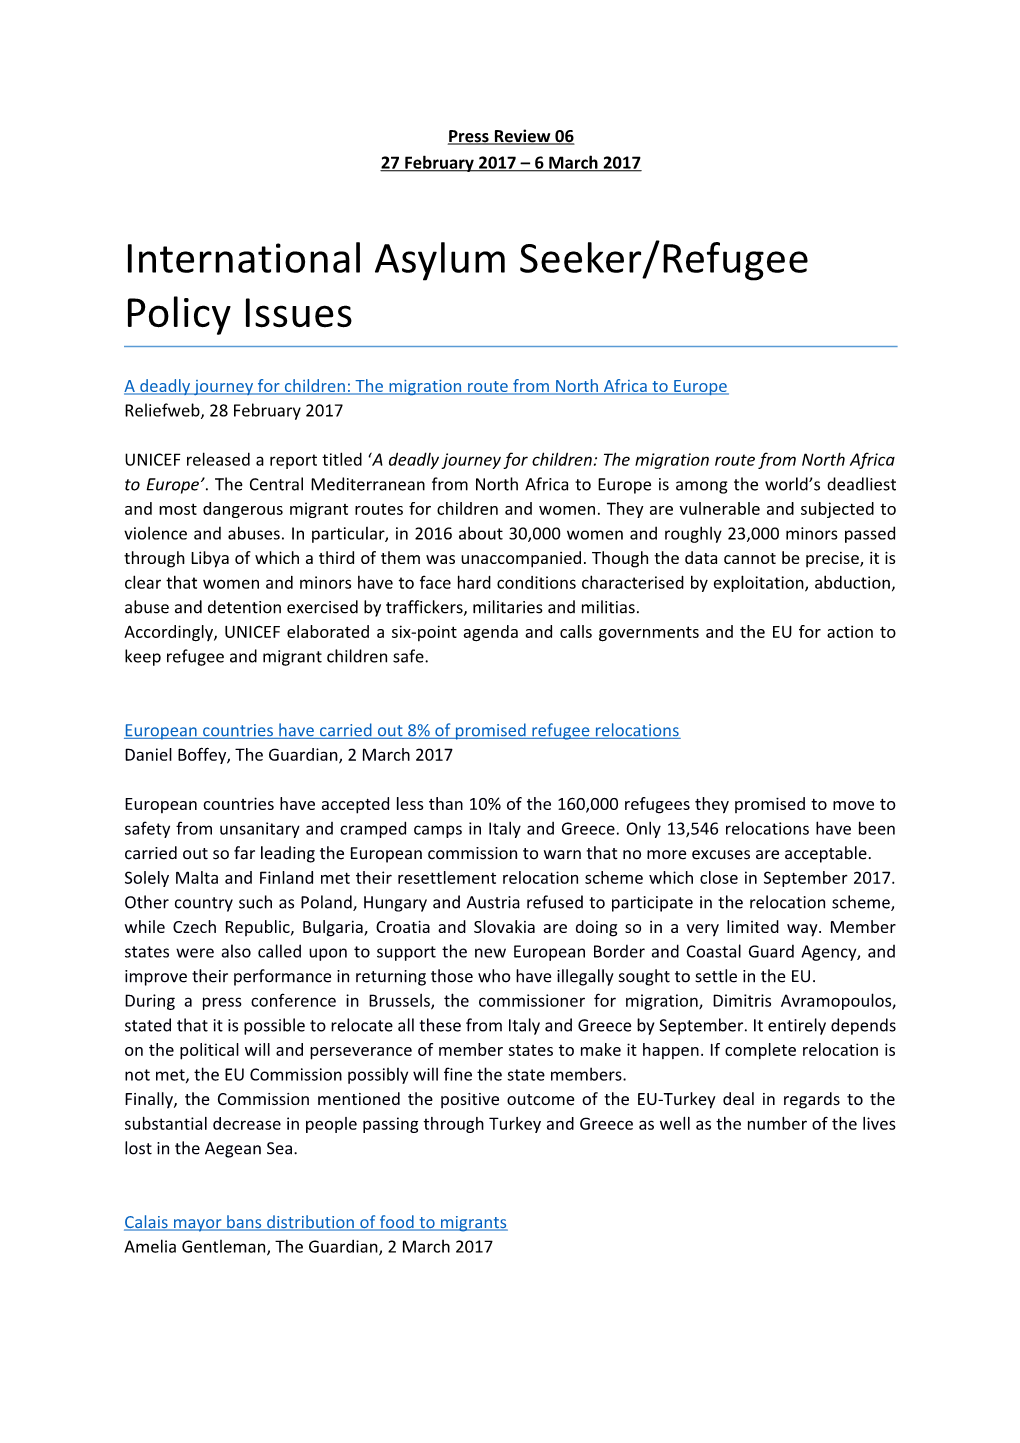 International Asylum Seeker/Refugee Policy Issues